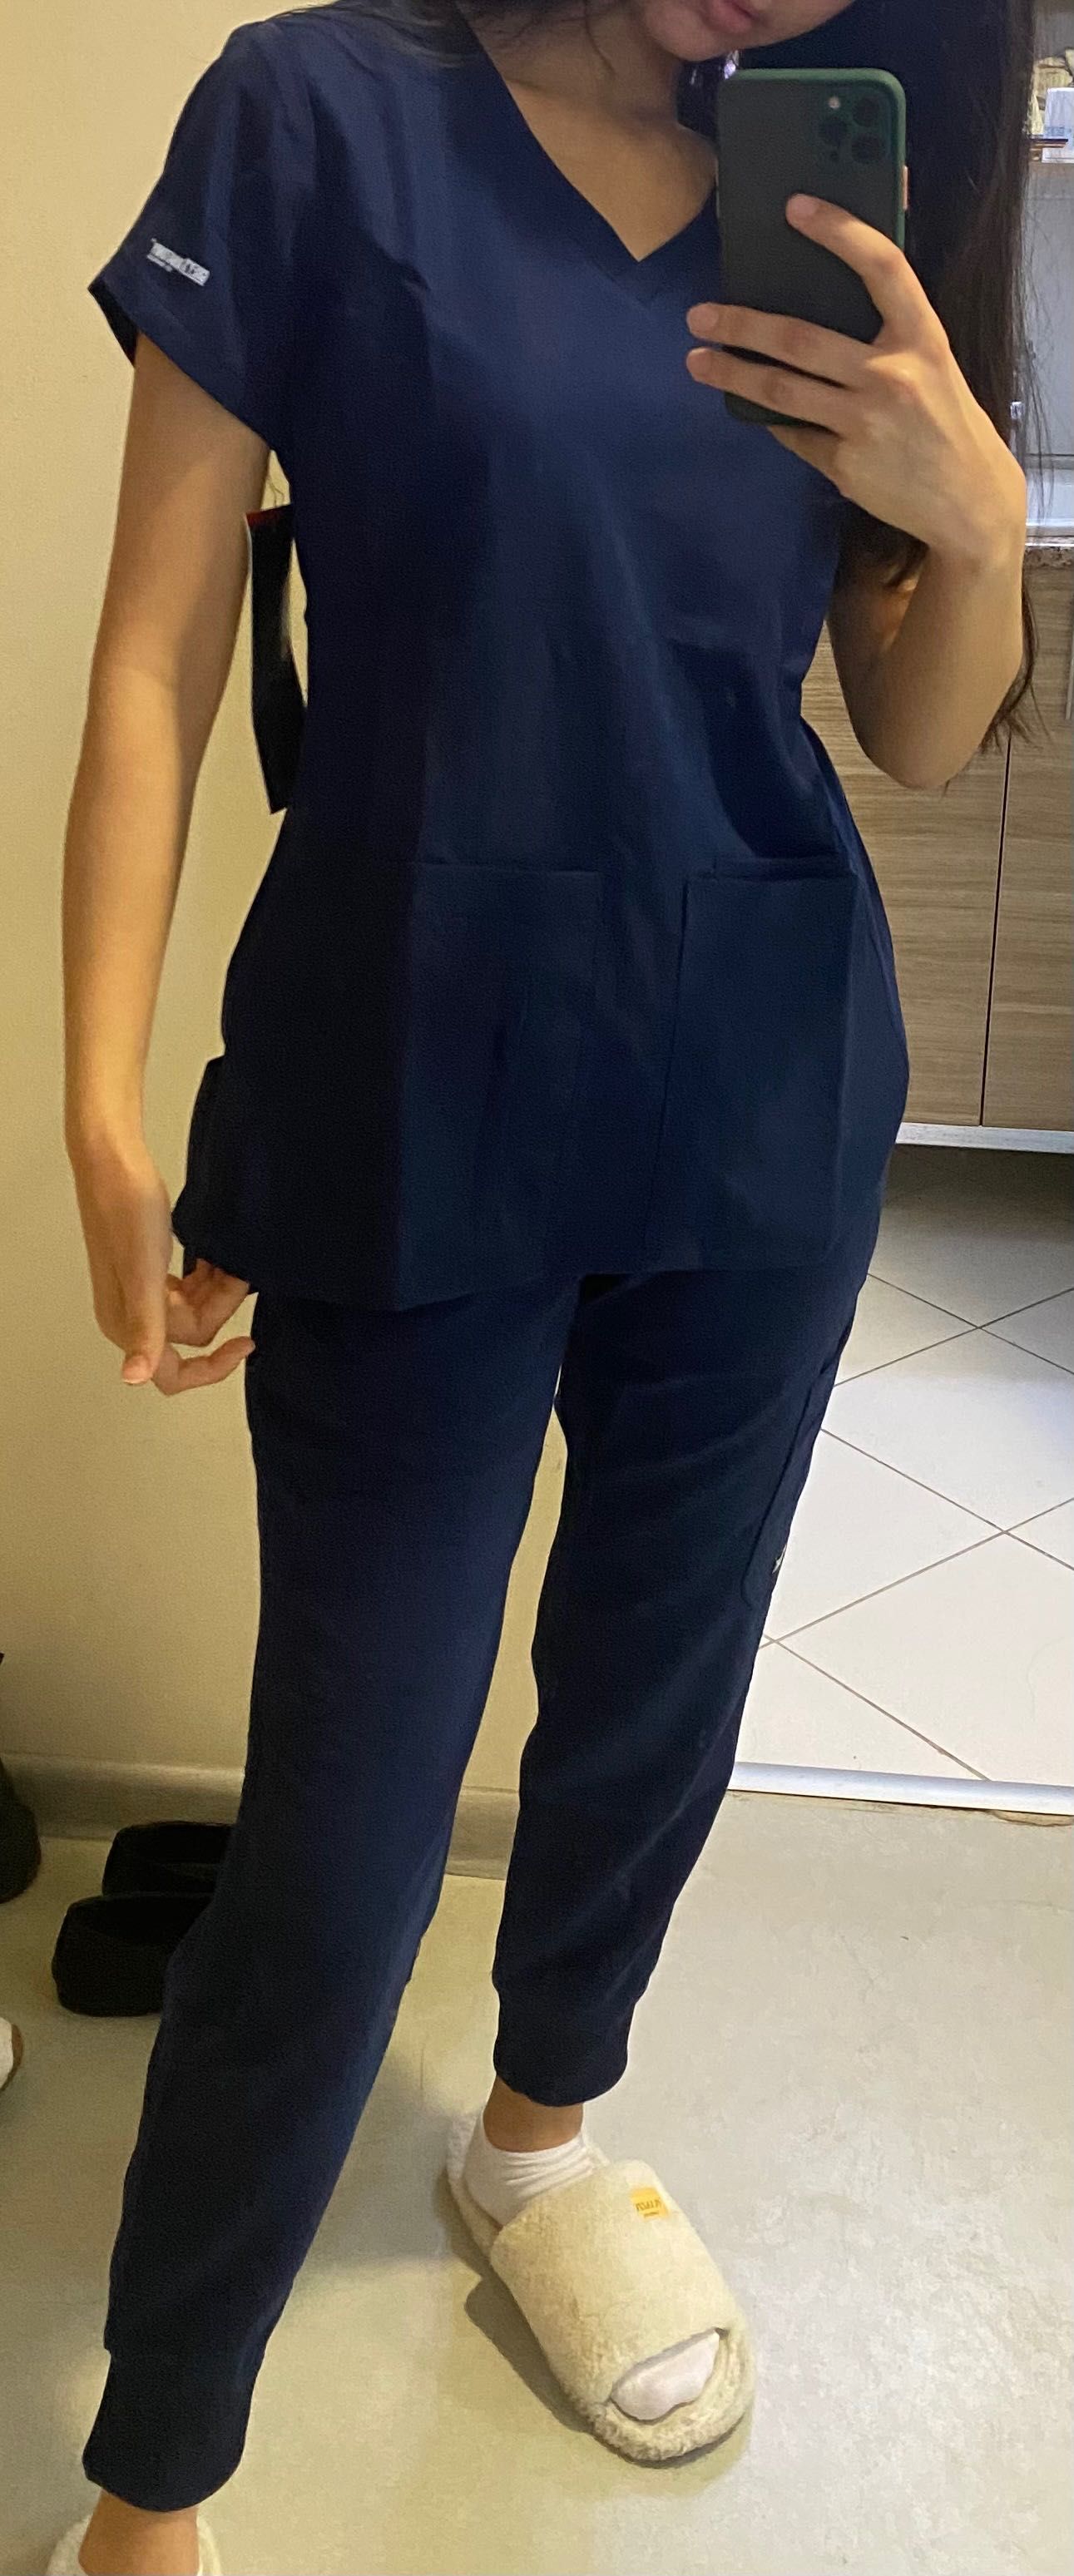 Хир костюм Greys anatomy, xs-s, темно-синий, медицинская одежда